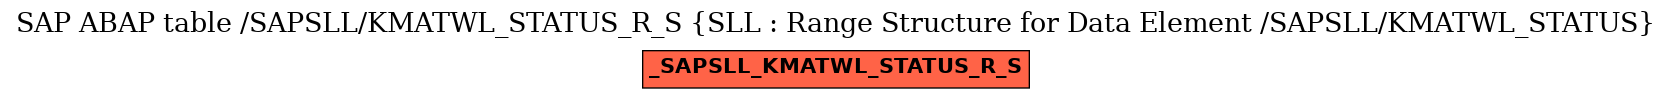 E-R Diagram for table /SAPSLL/KMATWL_STATUS_R_S (SLL : Range Structure for Data Element /SAPSLL/KMATWL_STATUS)